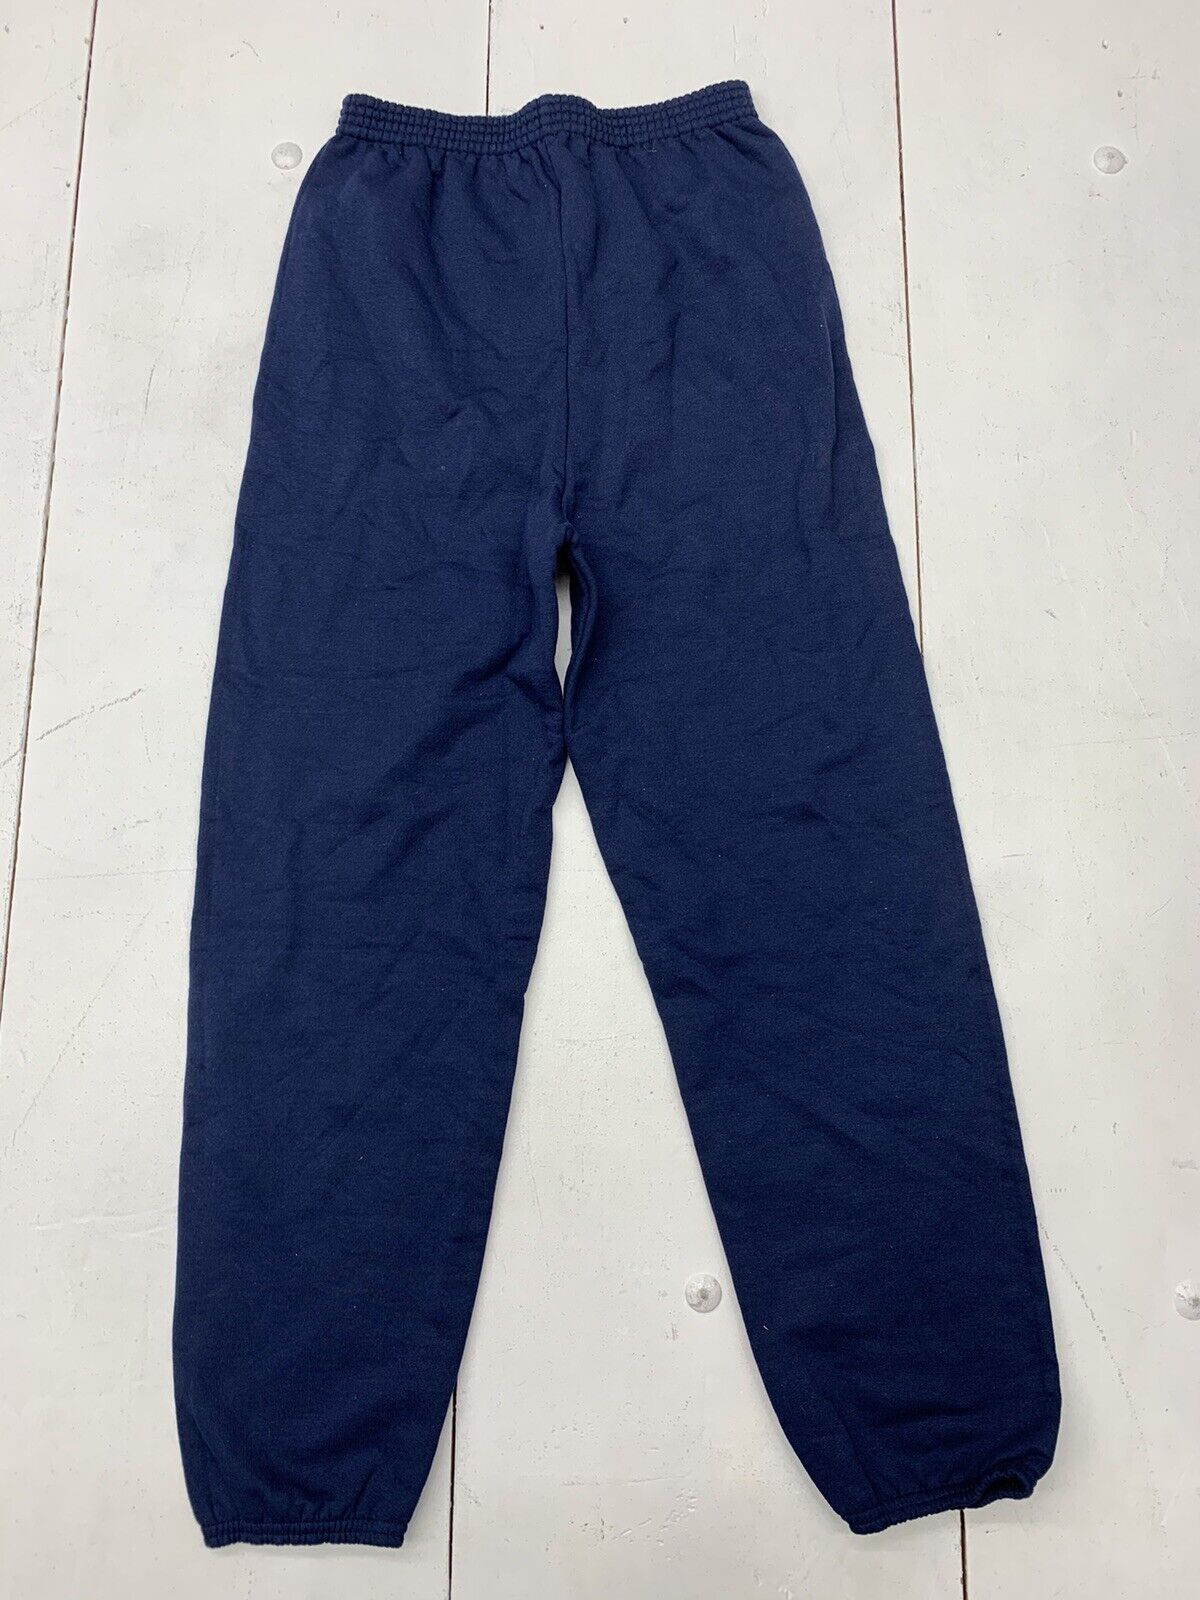 Hanes Boys Dark Blue Sweatpants Size Large